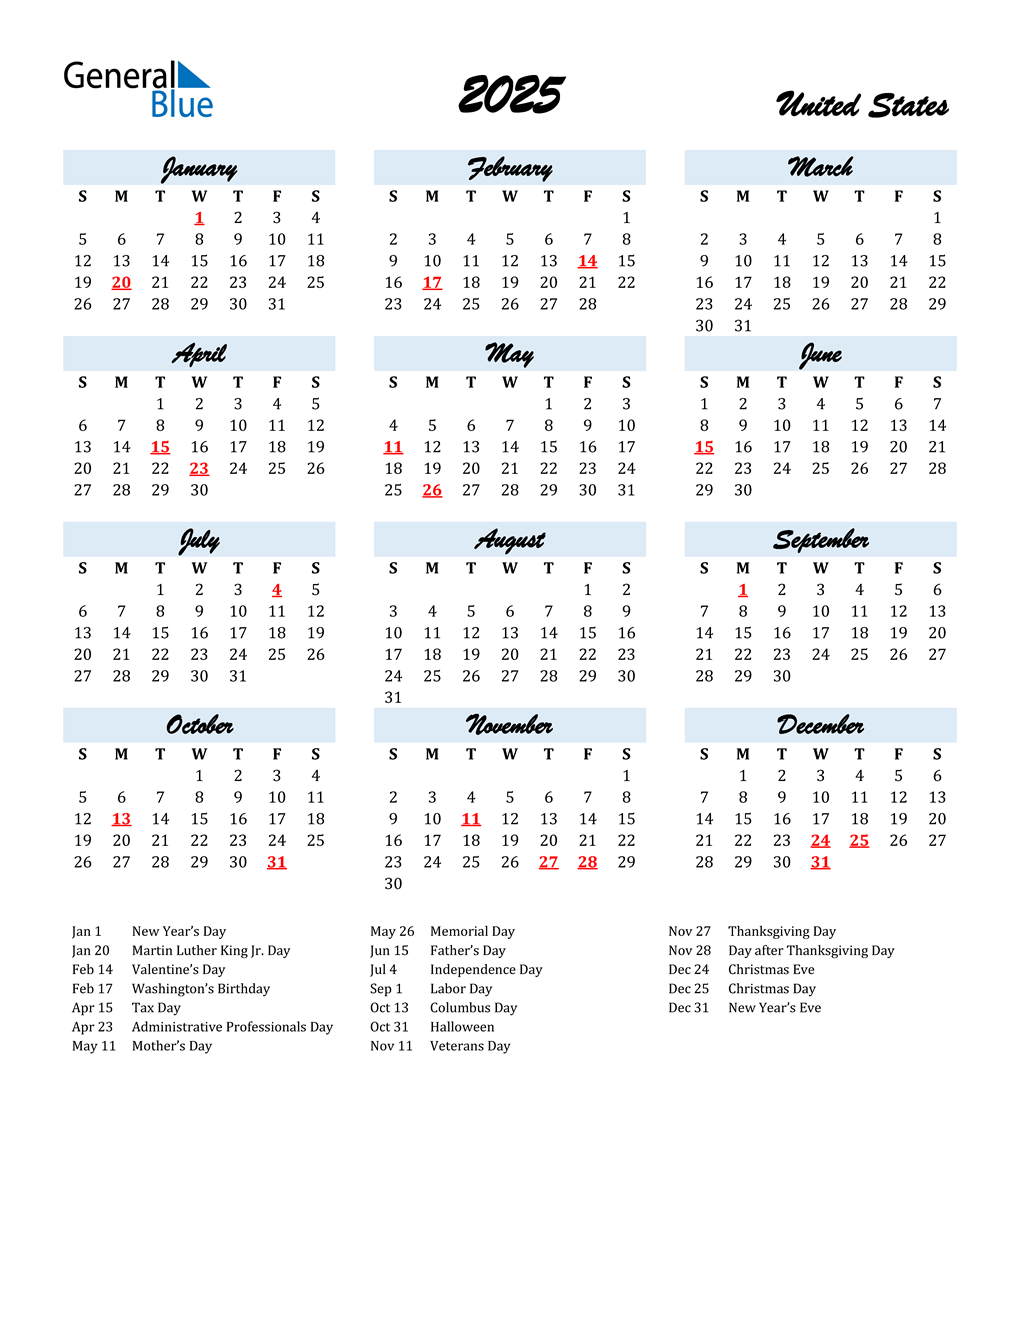 2025 Holiday Calendar Usps Calendar - Aleen Shayne